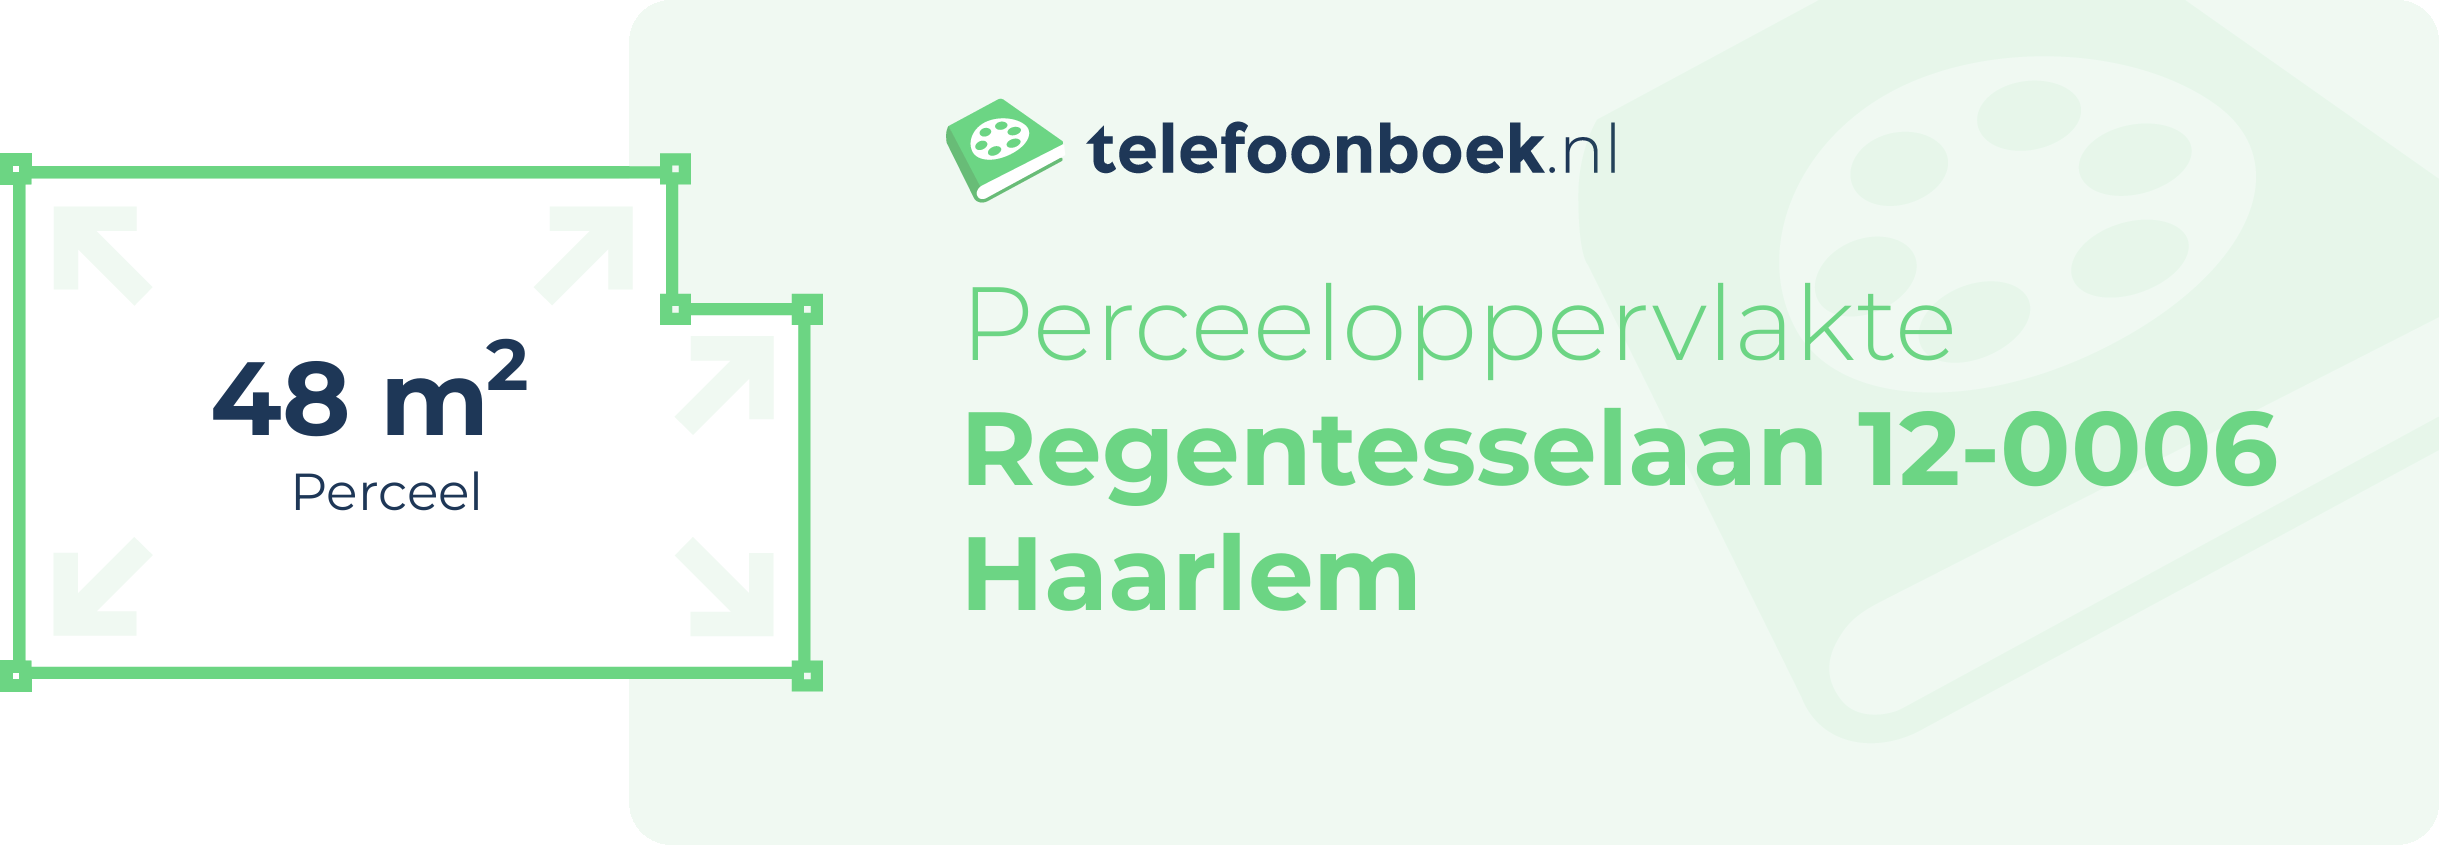 Perceeloppervlakte Regentesselaan 12-0006 Haarlem